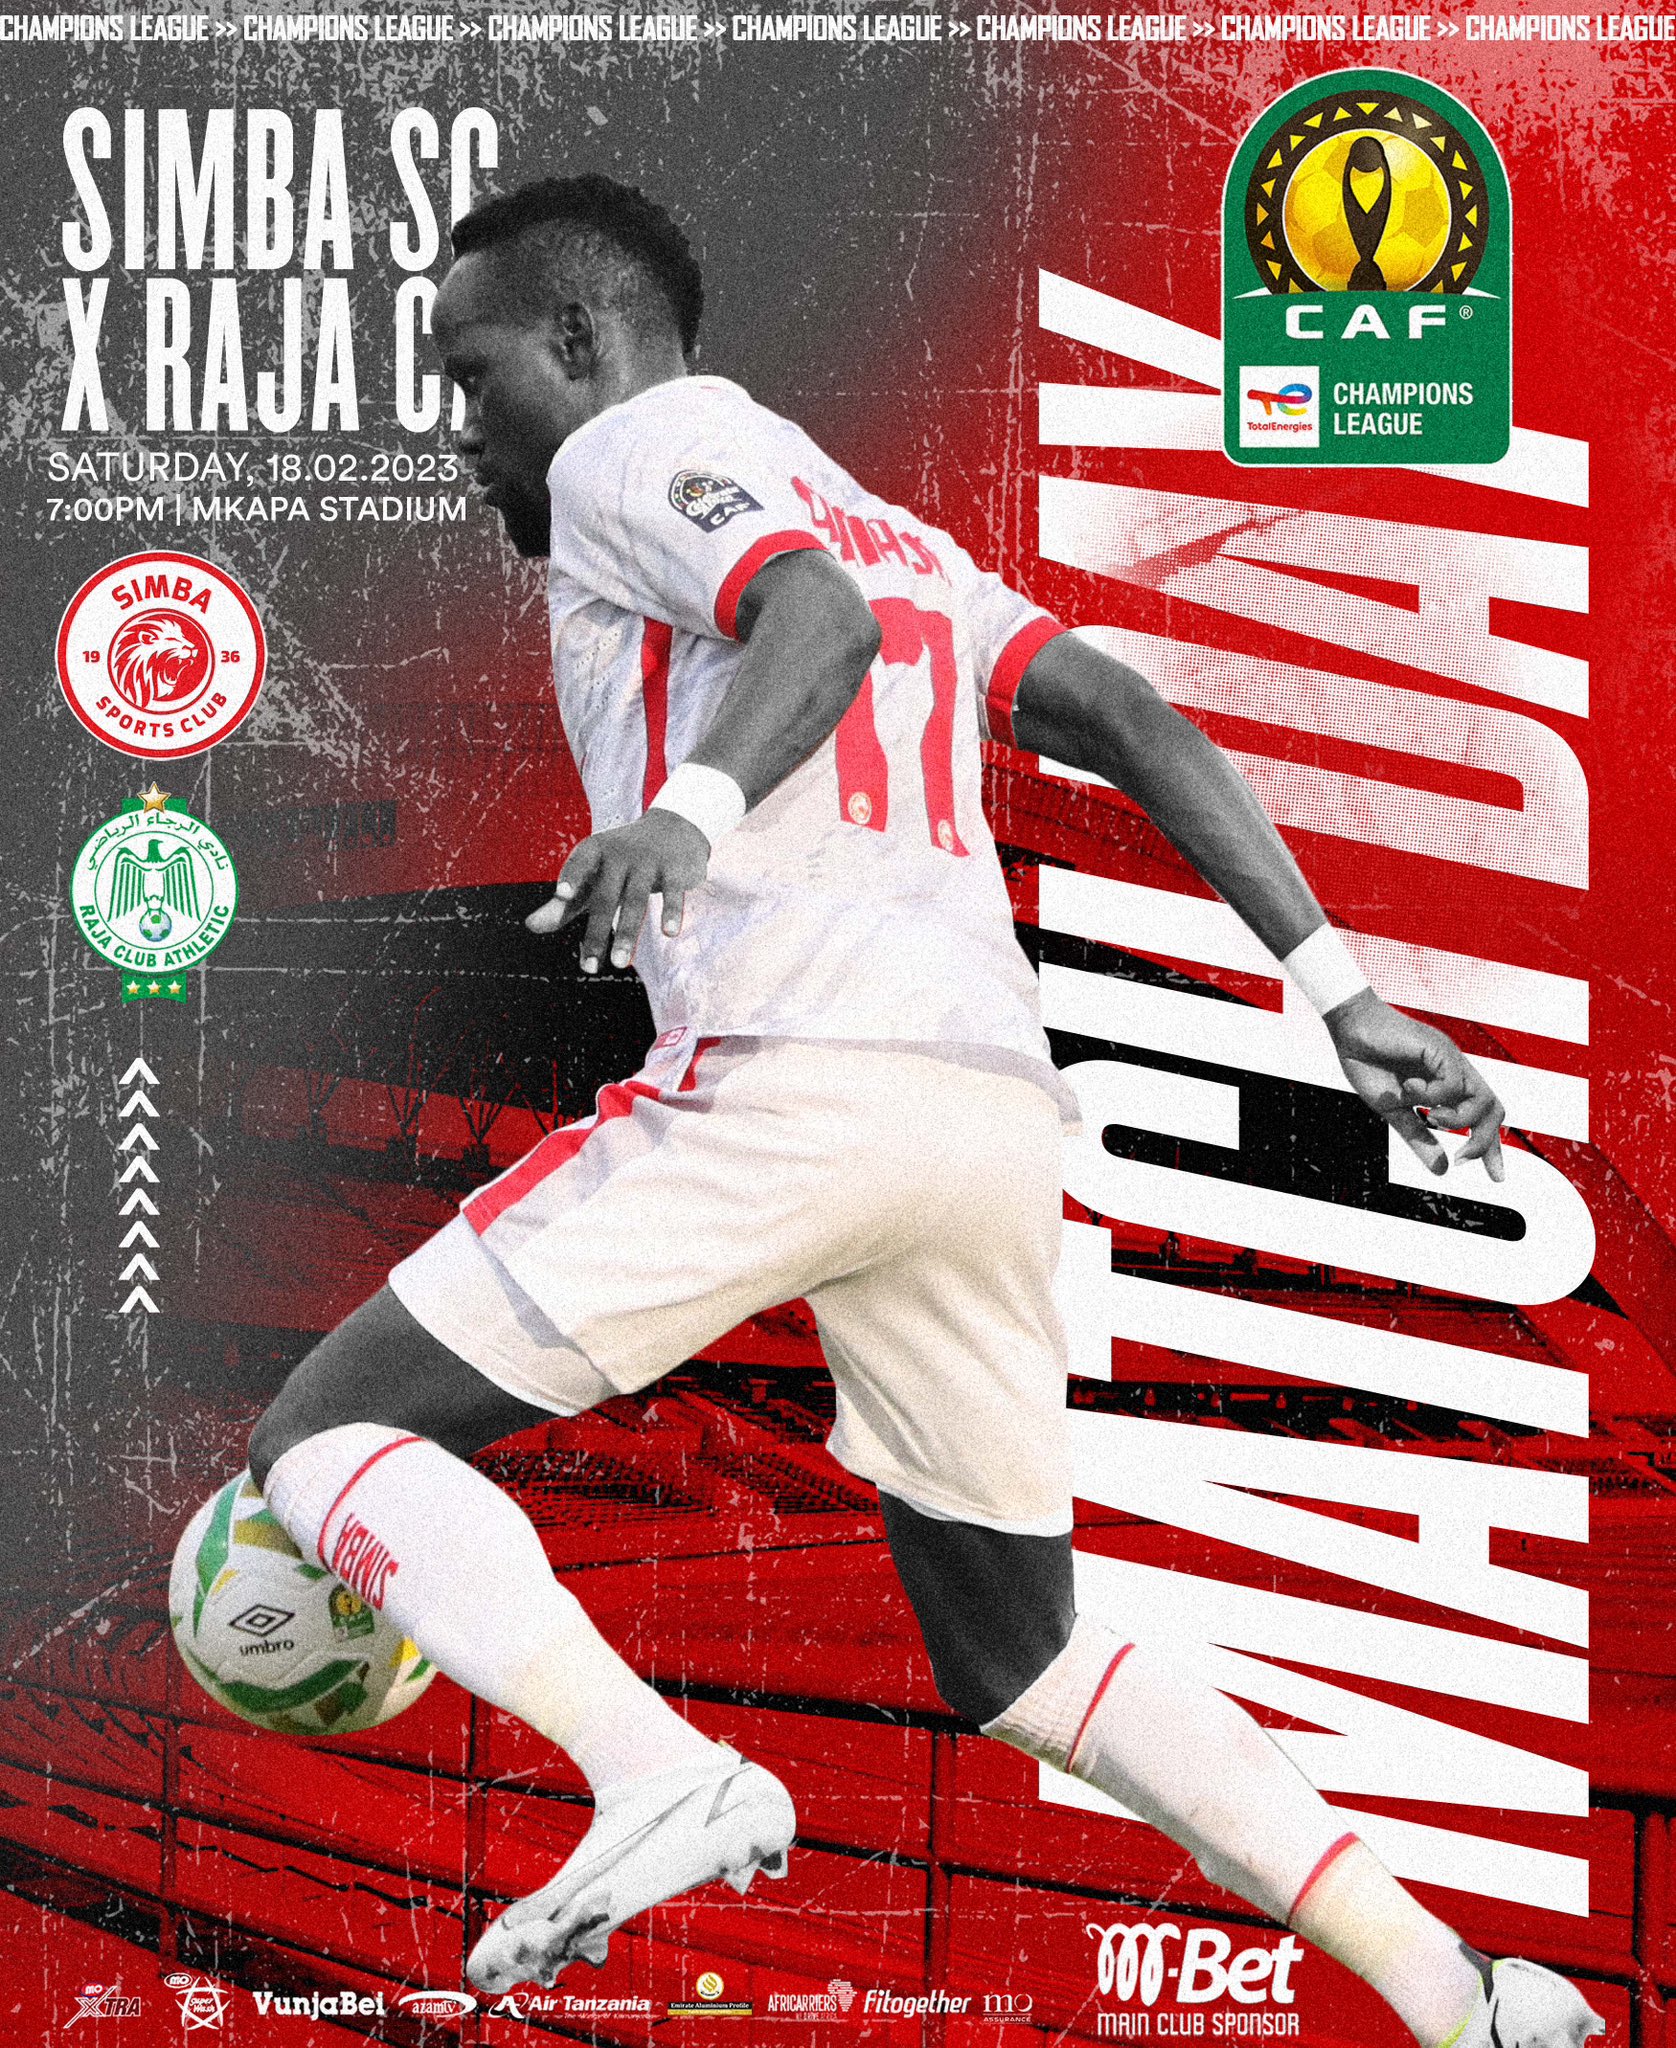 Matokeo ya Simba VS Raja Club Athletic CAF Champions League on Feb 18, 2023